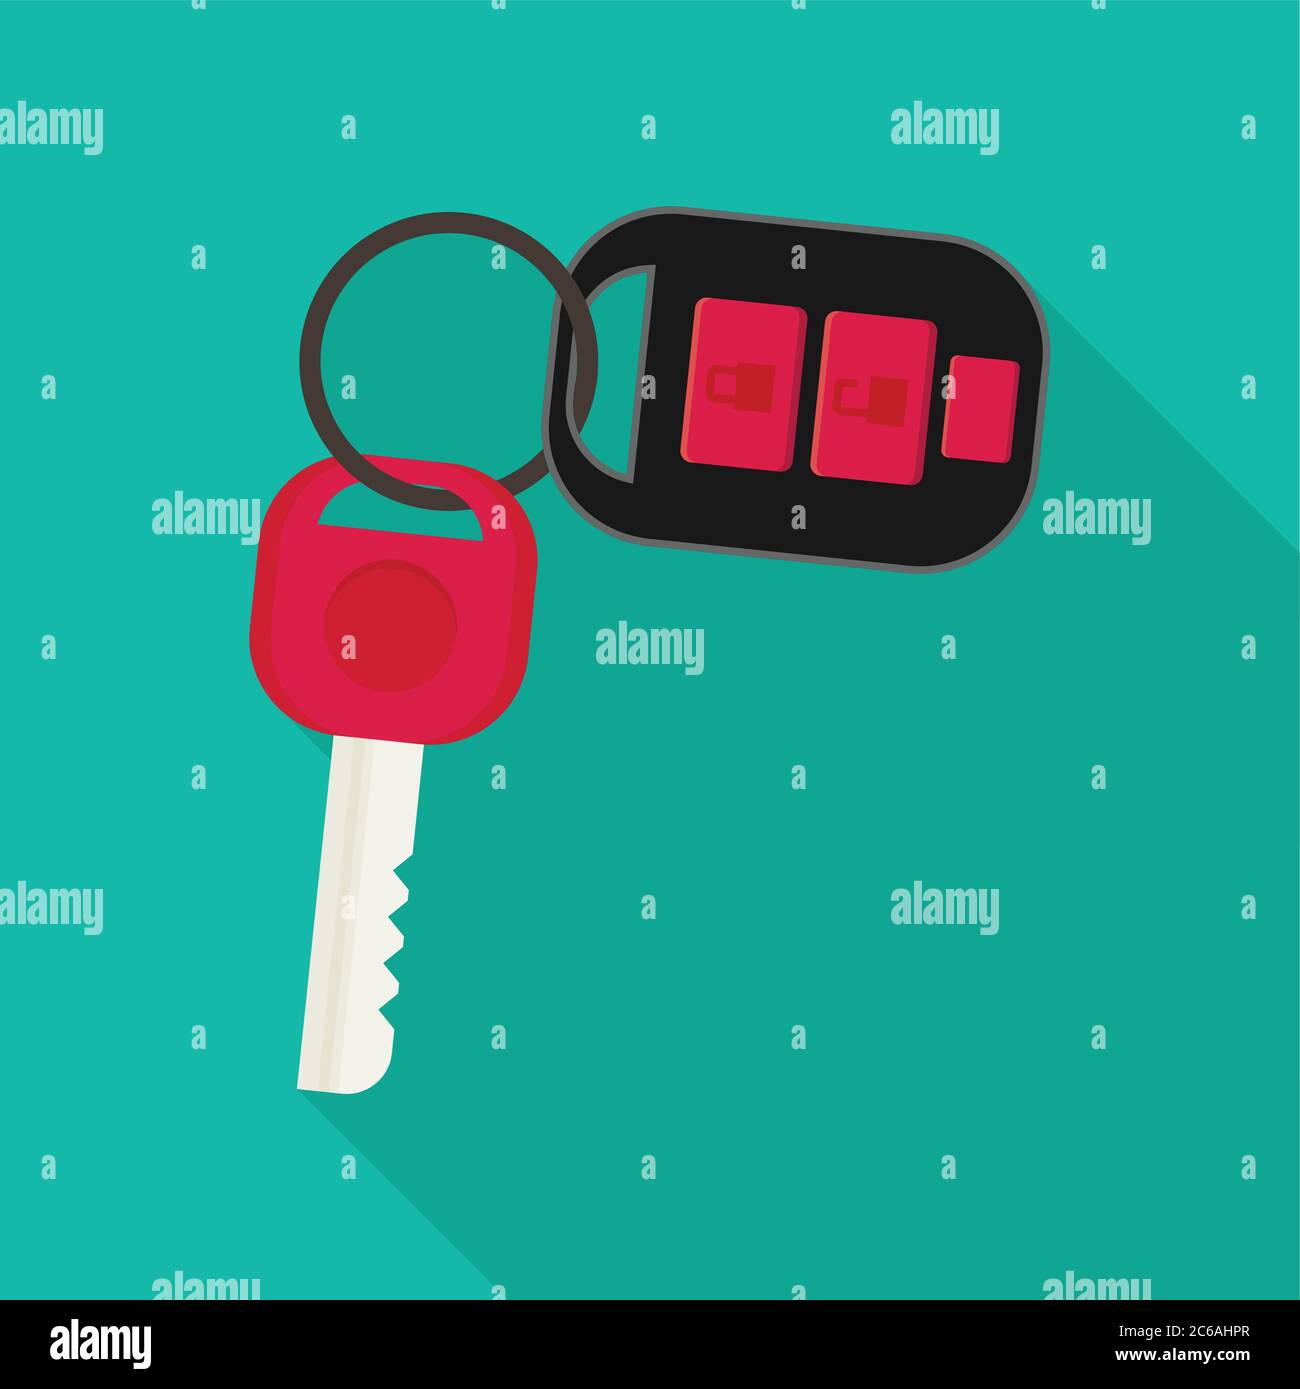 Rent flat key Stock Vector Images - Alamy